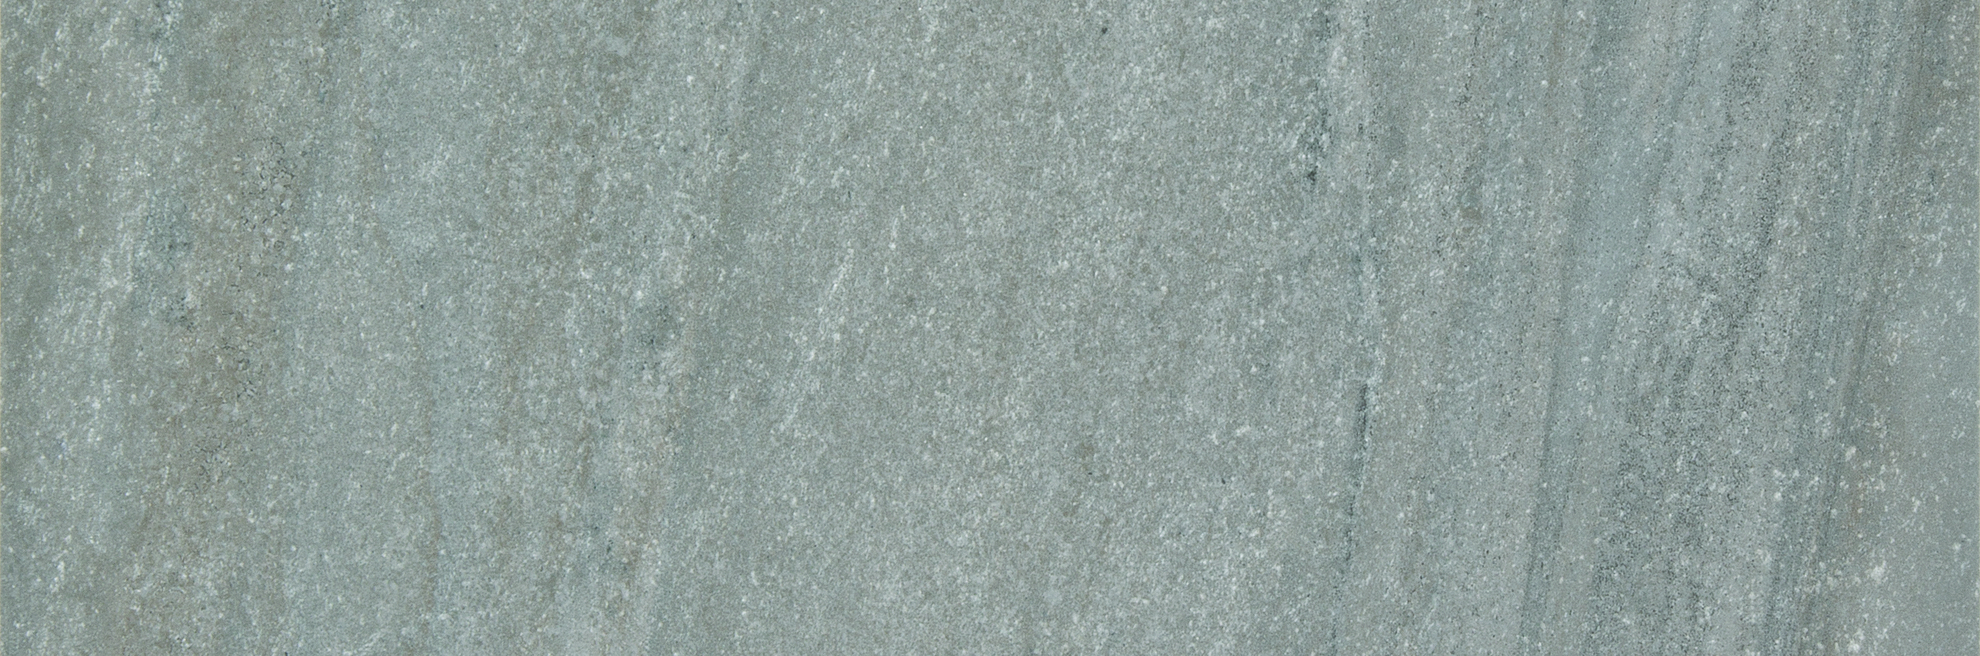 60x120 Pietra Pienza Tile Dark Grey Semi Glossy